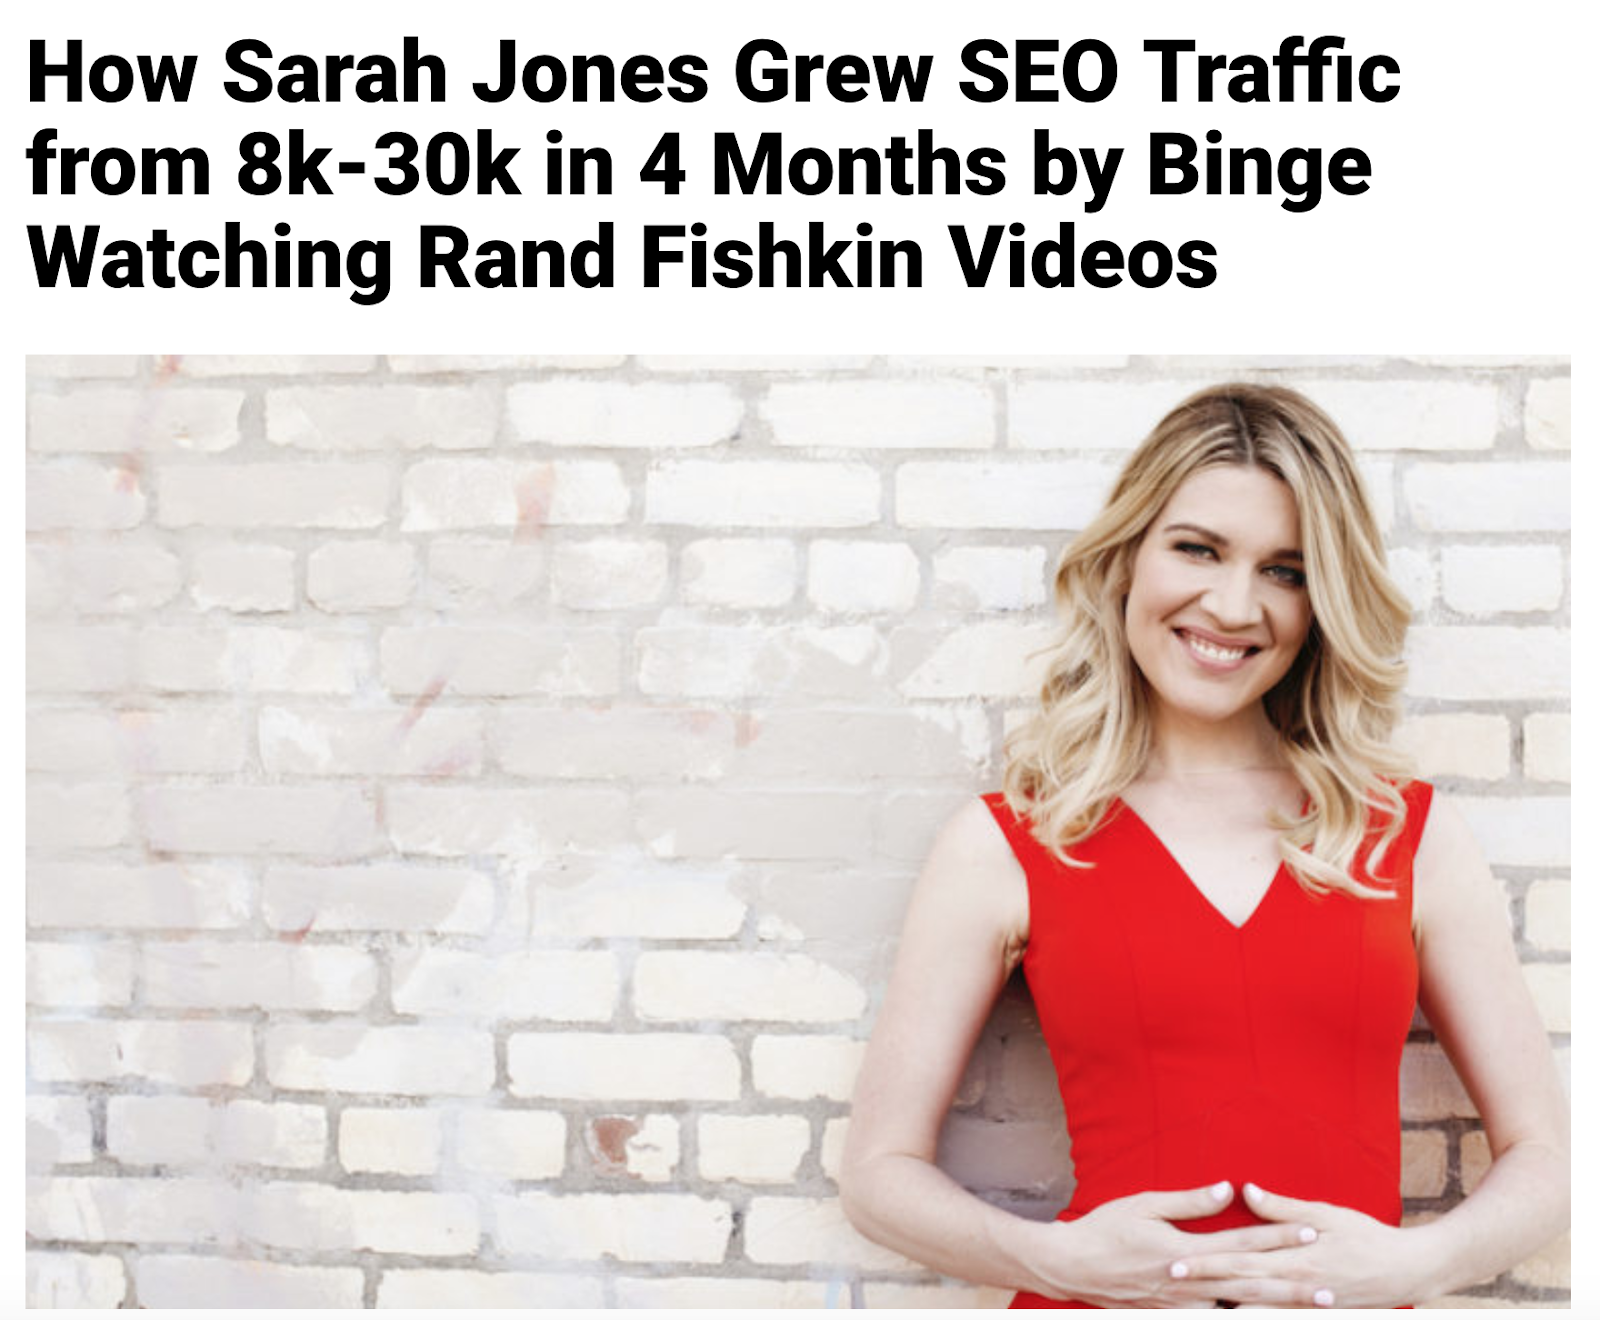 How Sarah Jones Grew SEO Traffic from 8k-30k in 4 Months by Binge Watching Rand Fishkin Videos